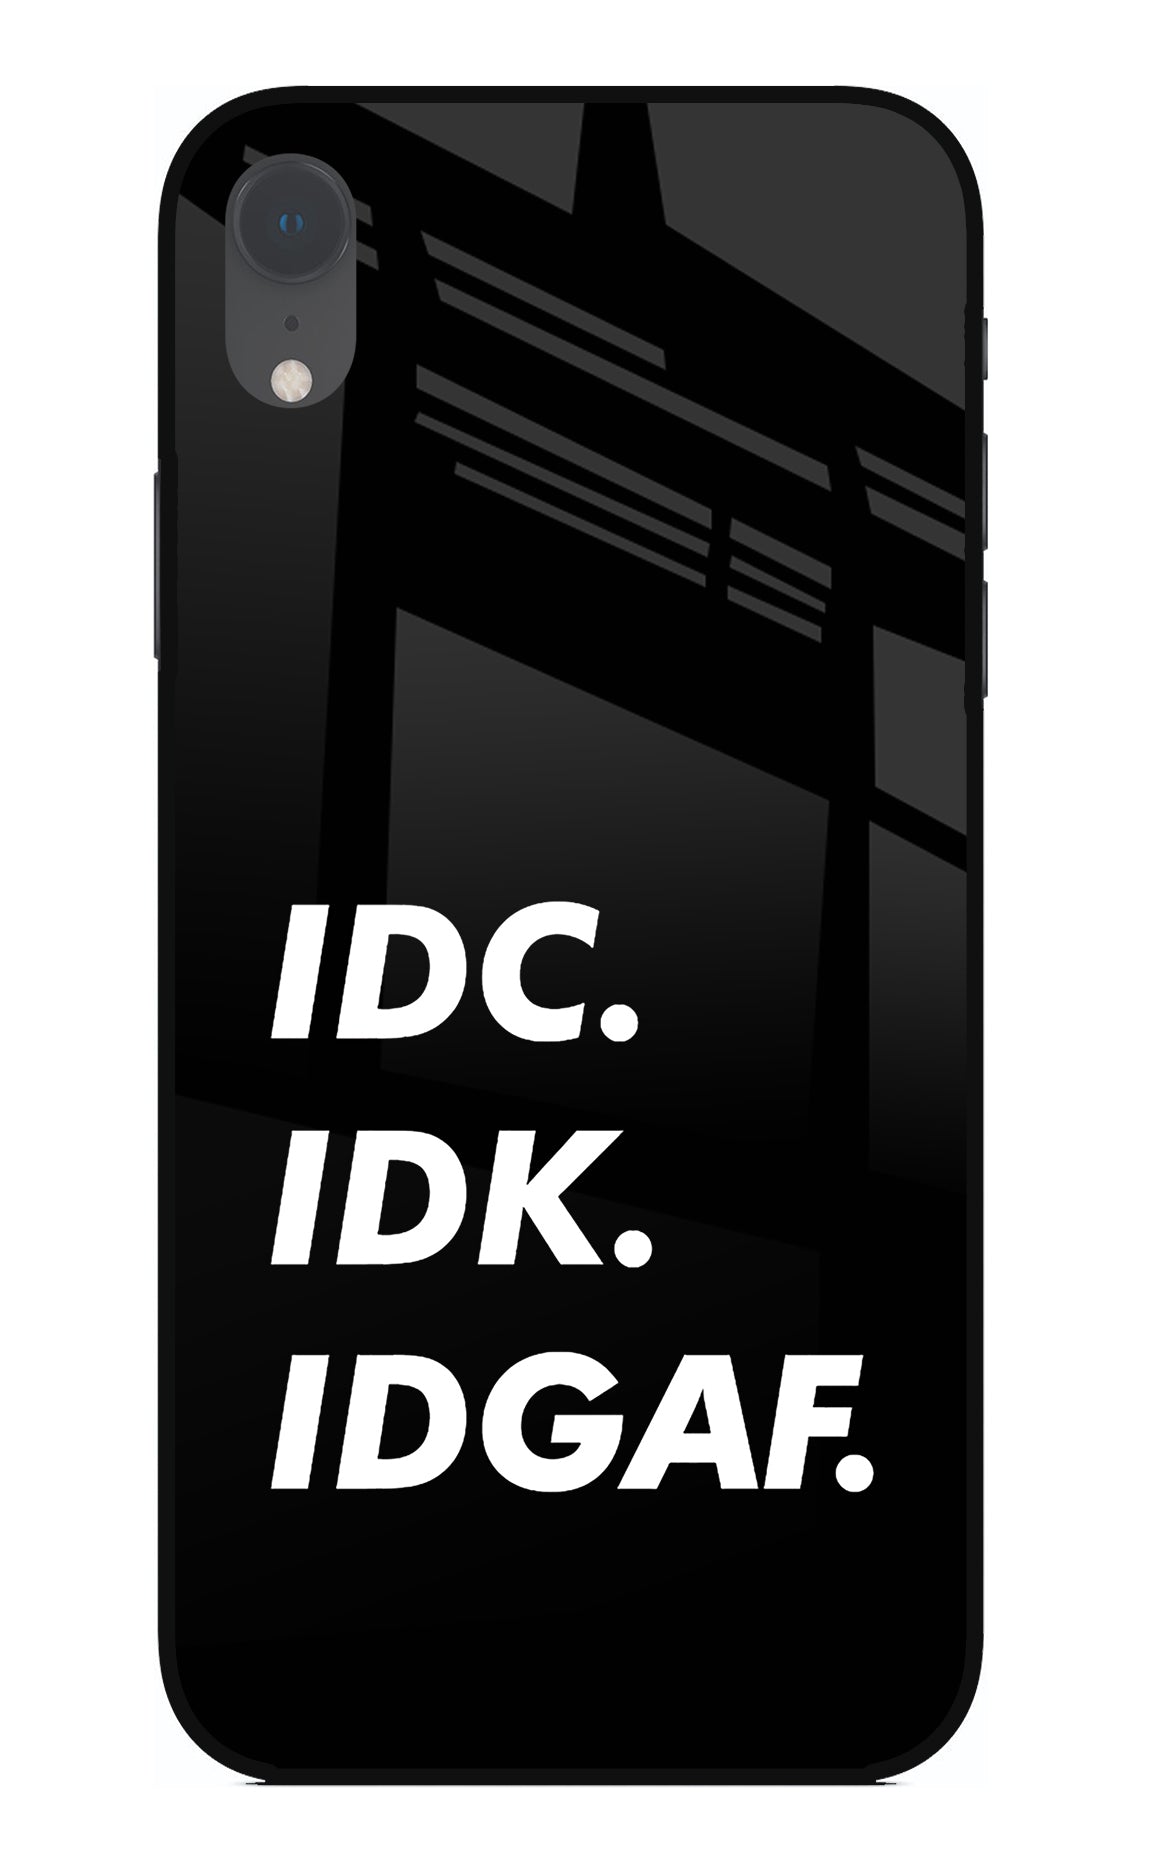 Idc Idk Idgaf iPhone XR Back Cover